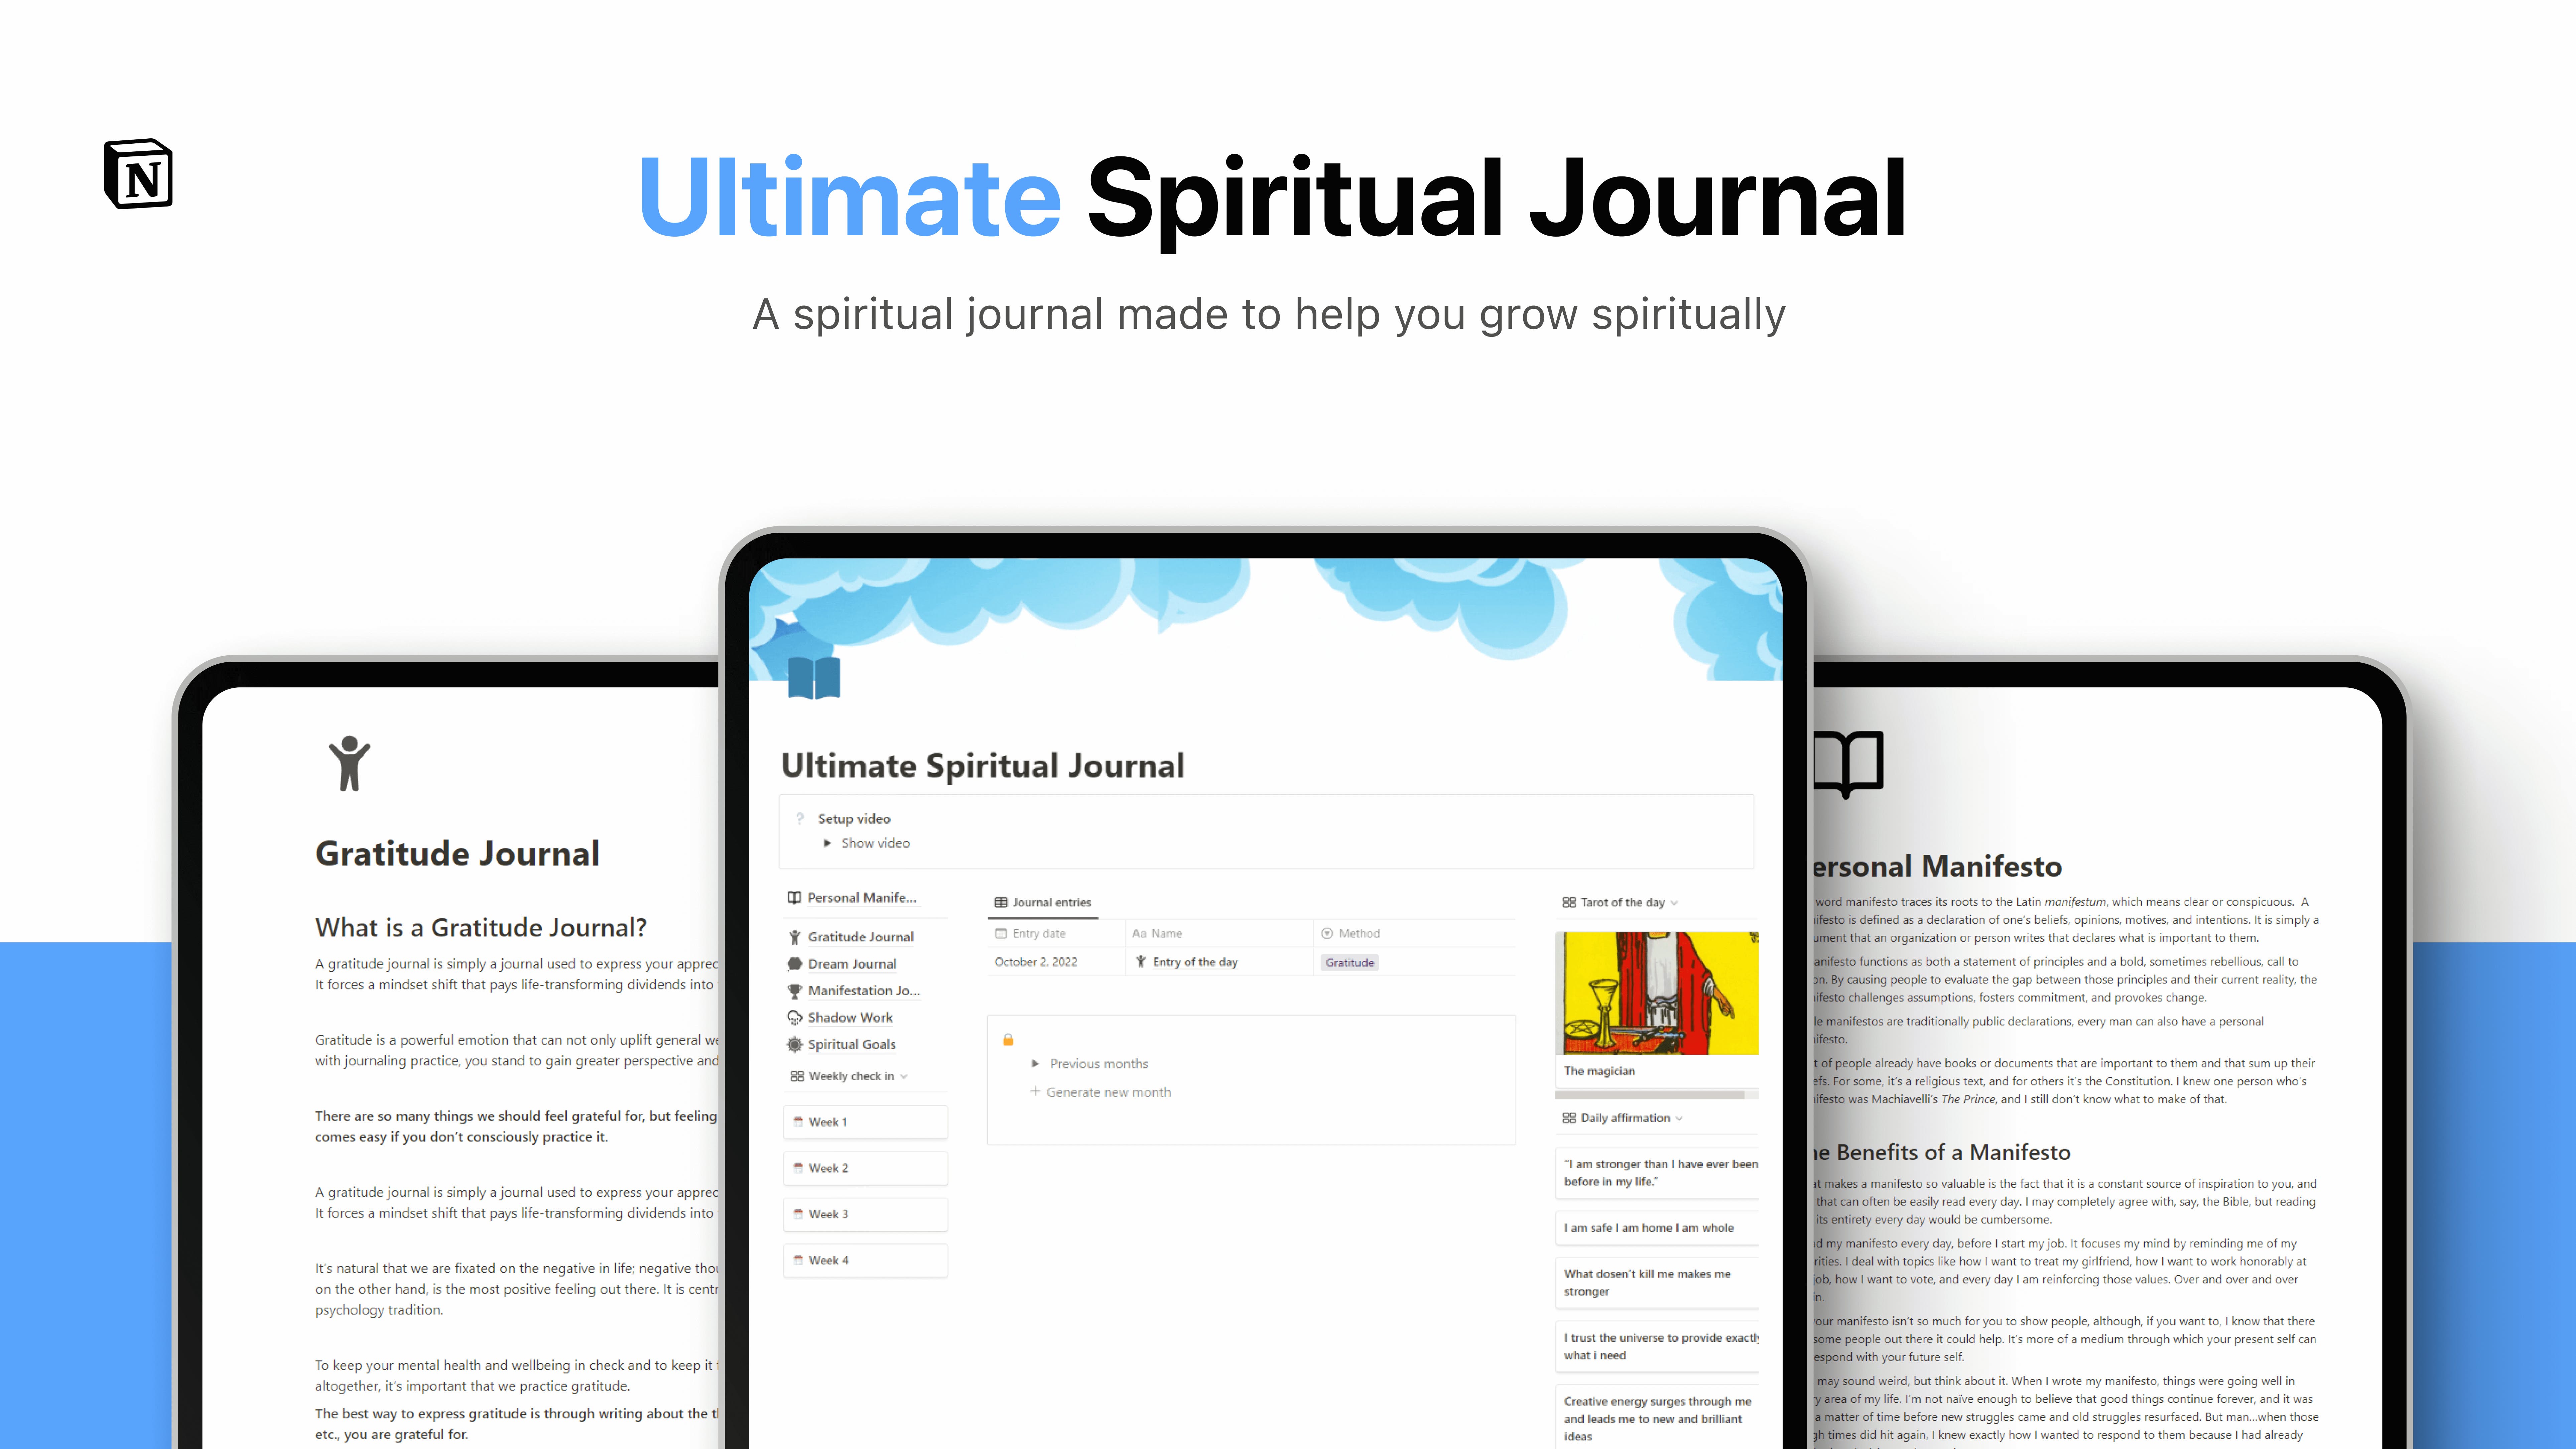 Ultimate Spiritual Journal media 1